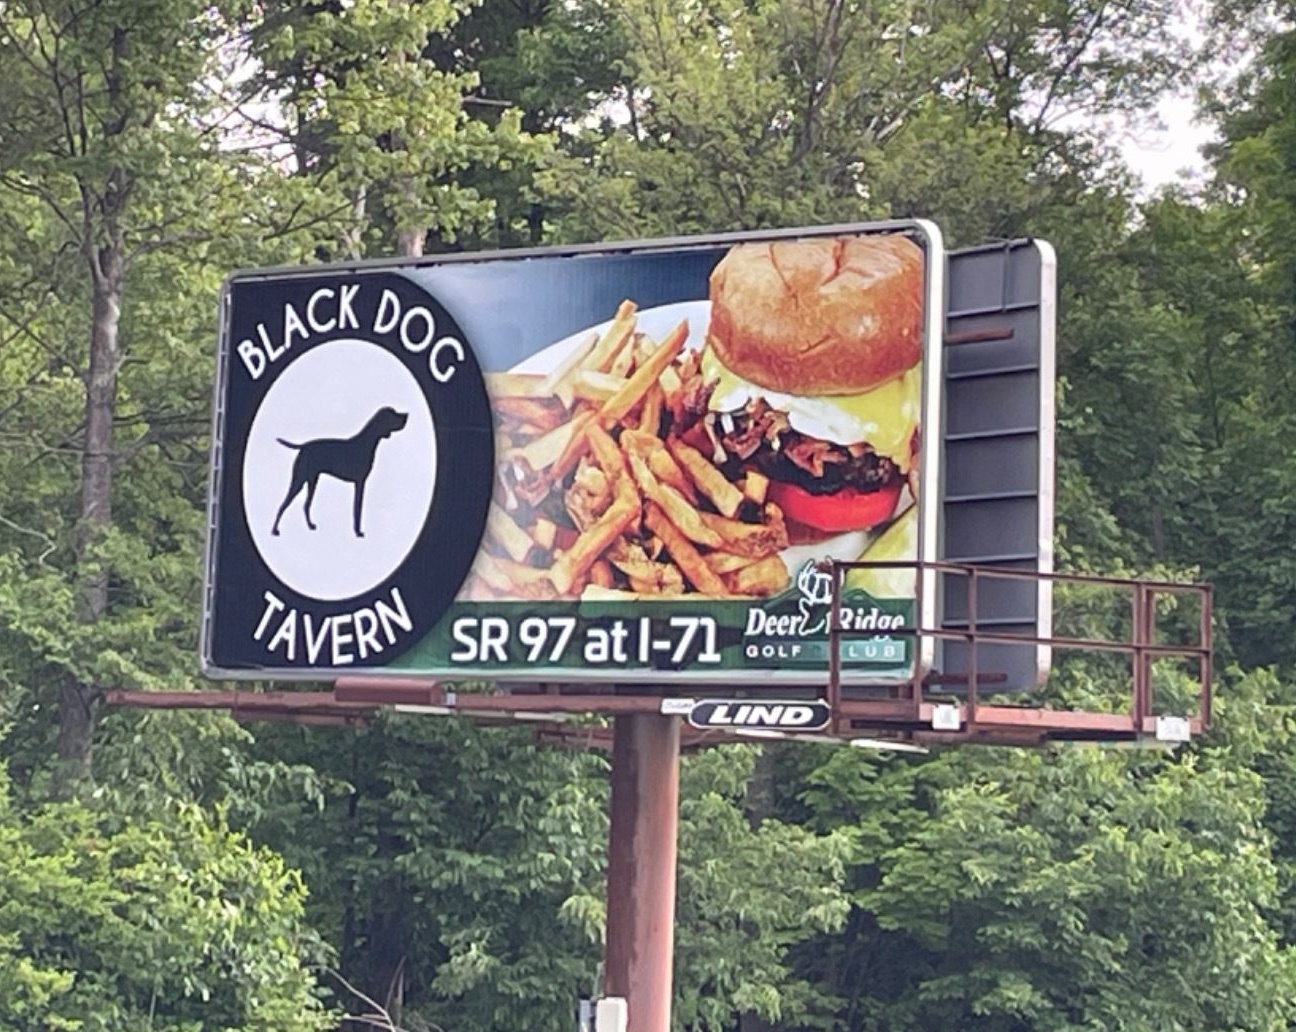 Deer Ridge Golf Course, Black Dog Tavern, burger fries billboard